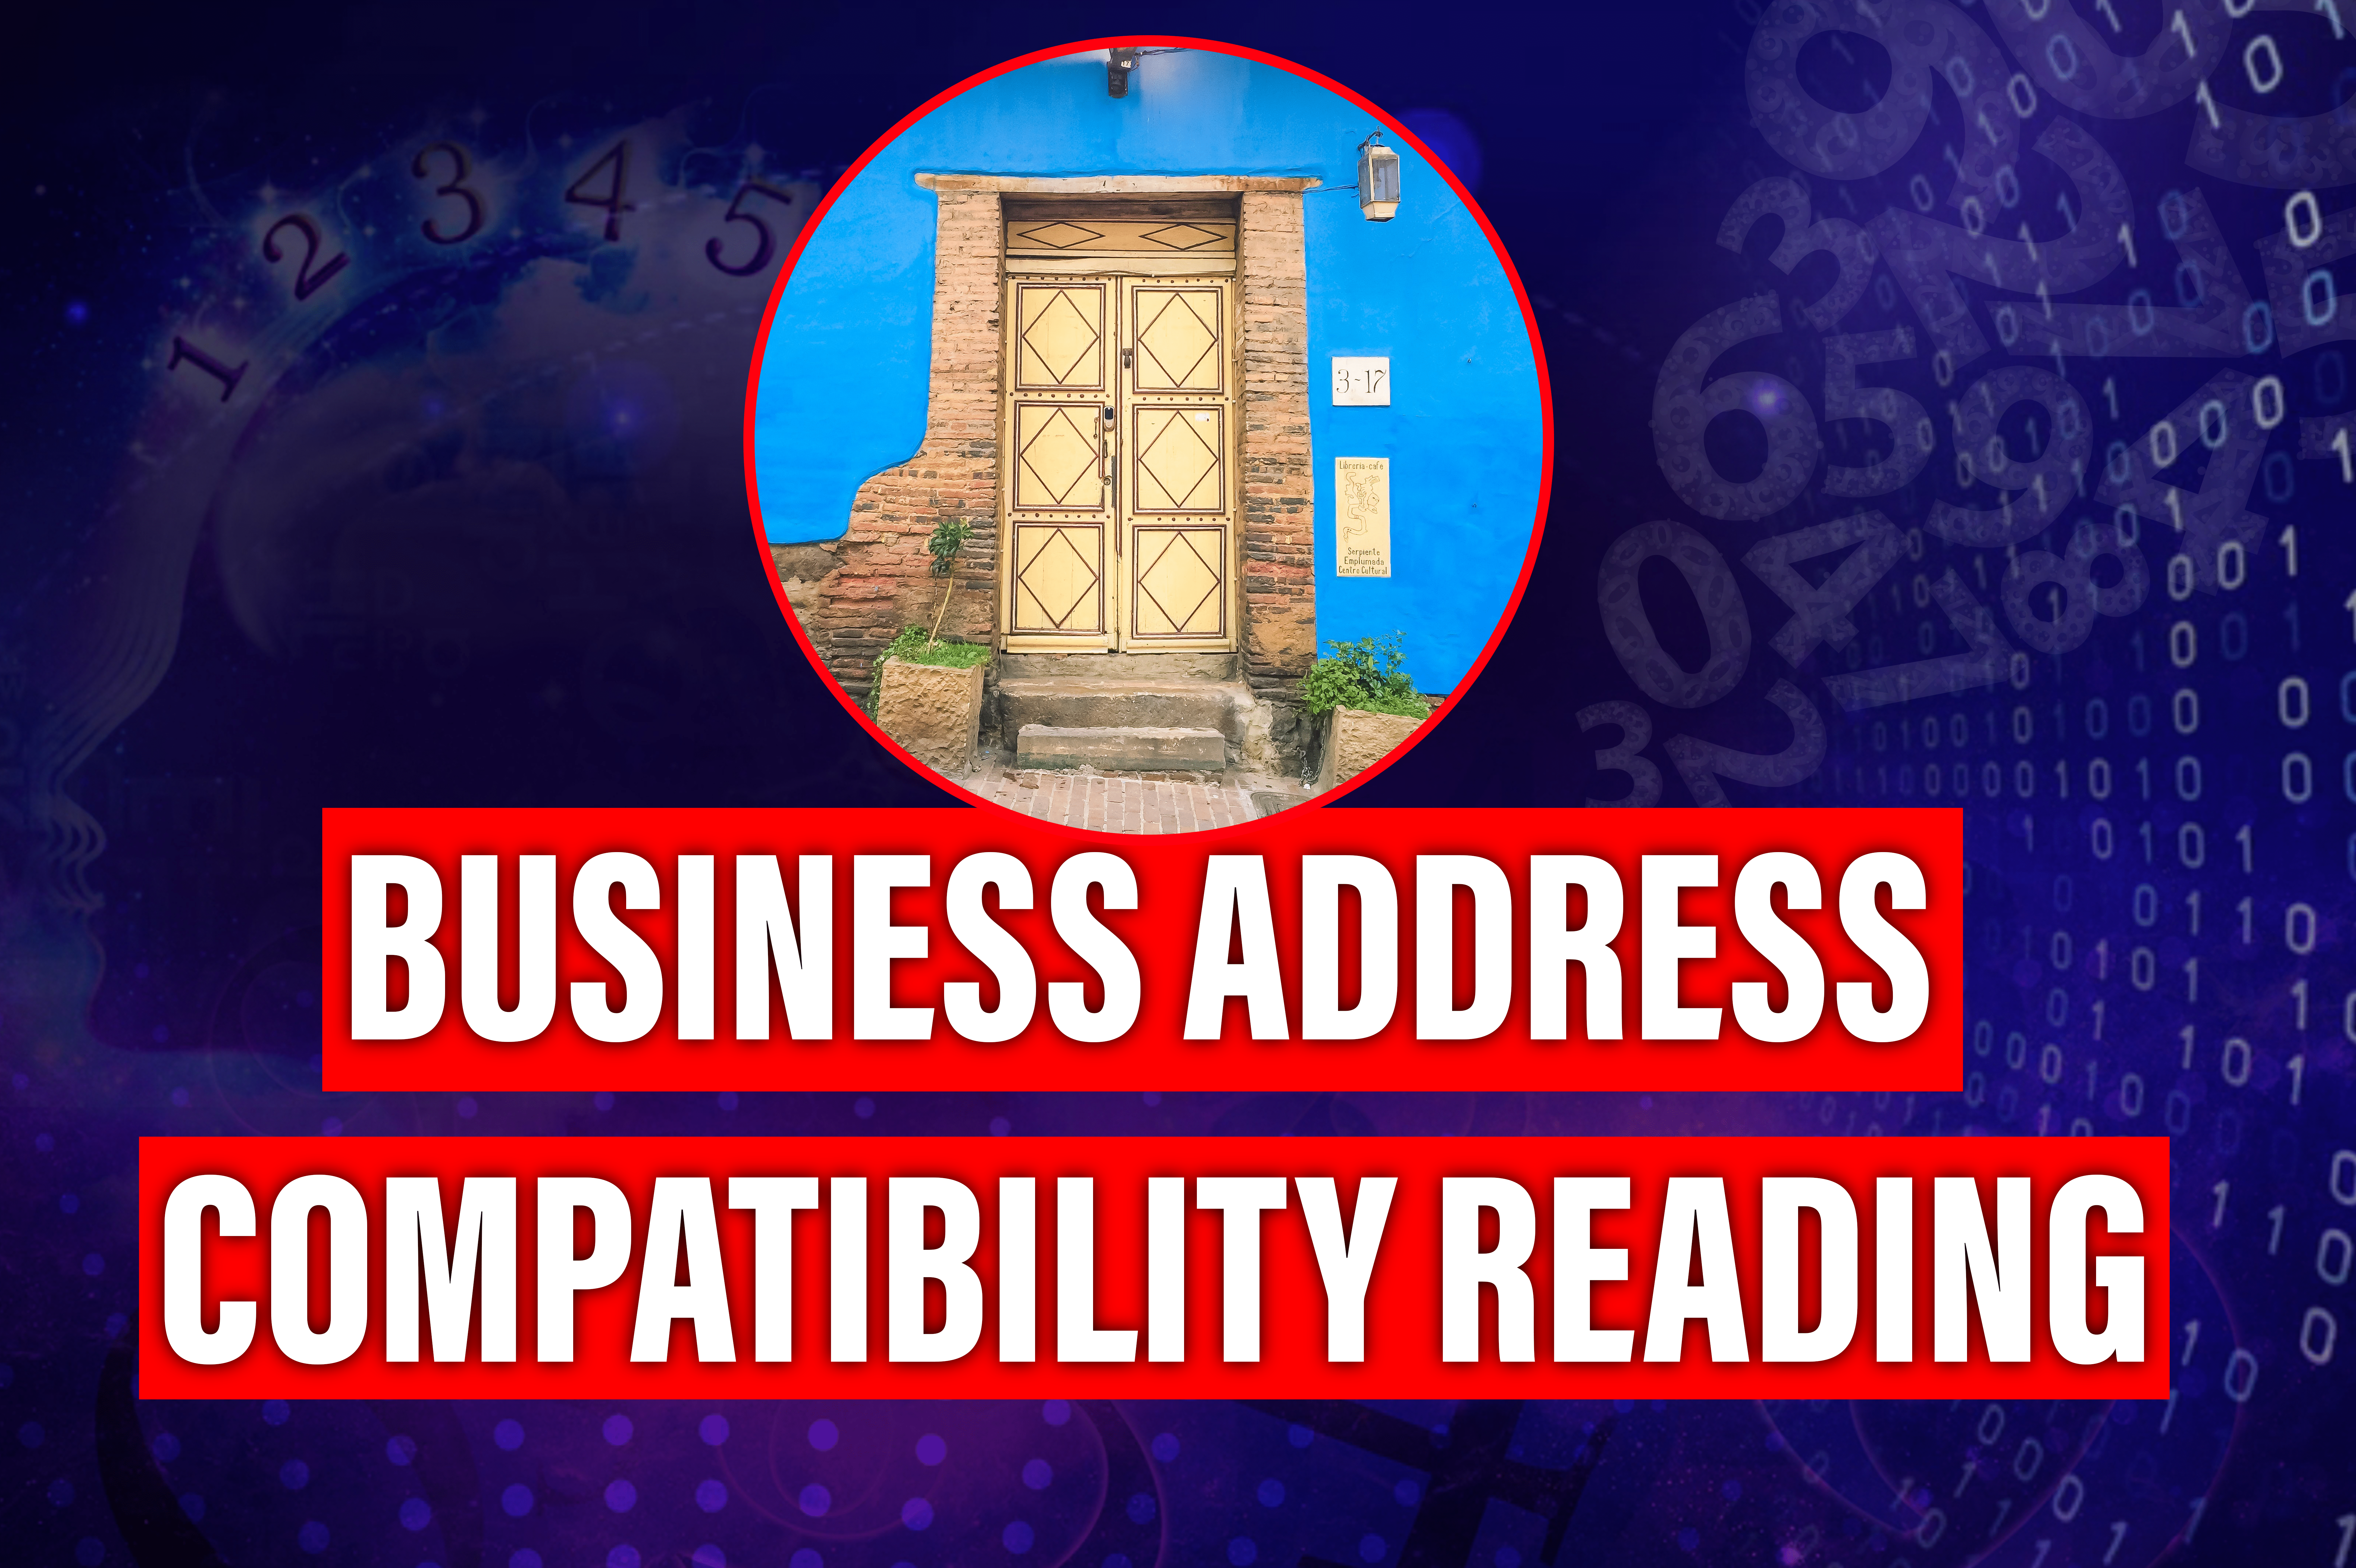 Business Address compatibility